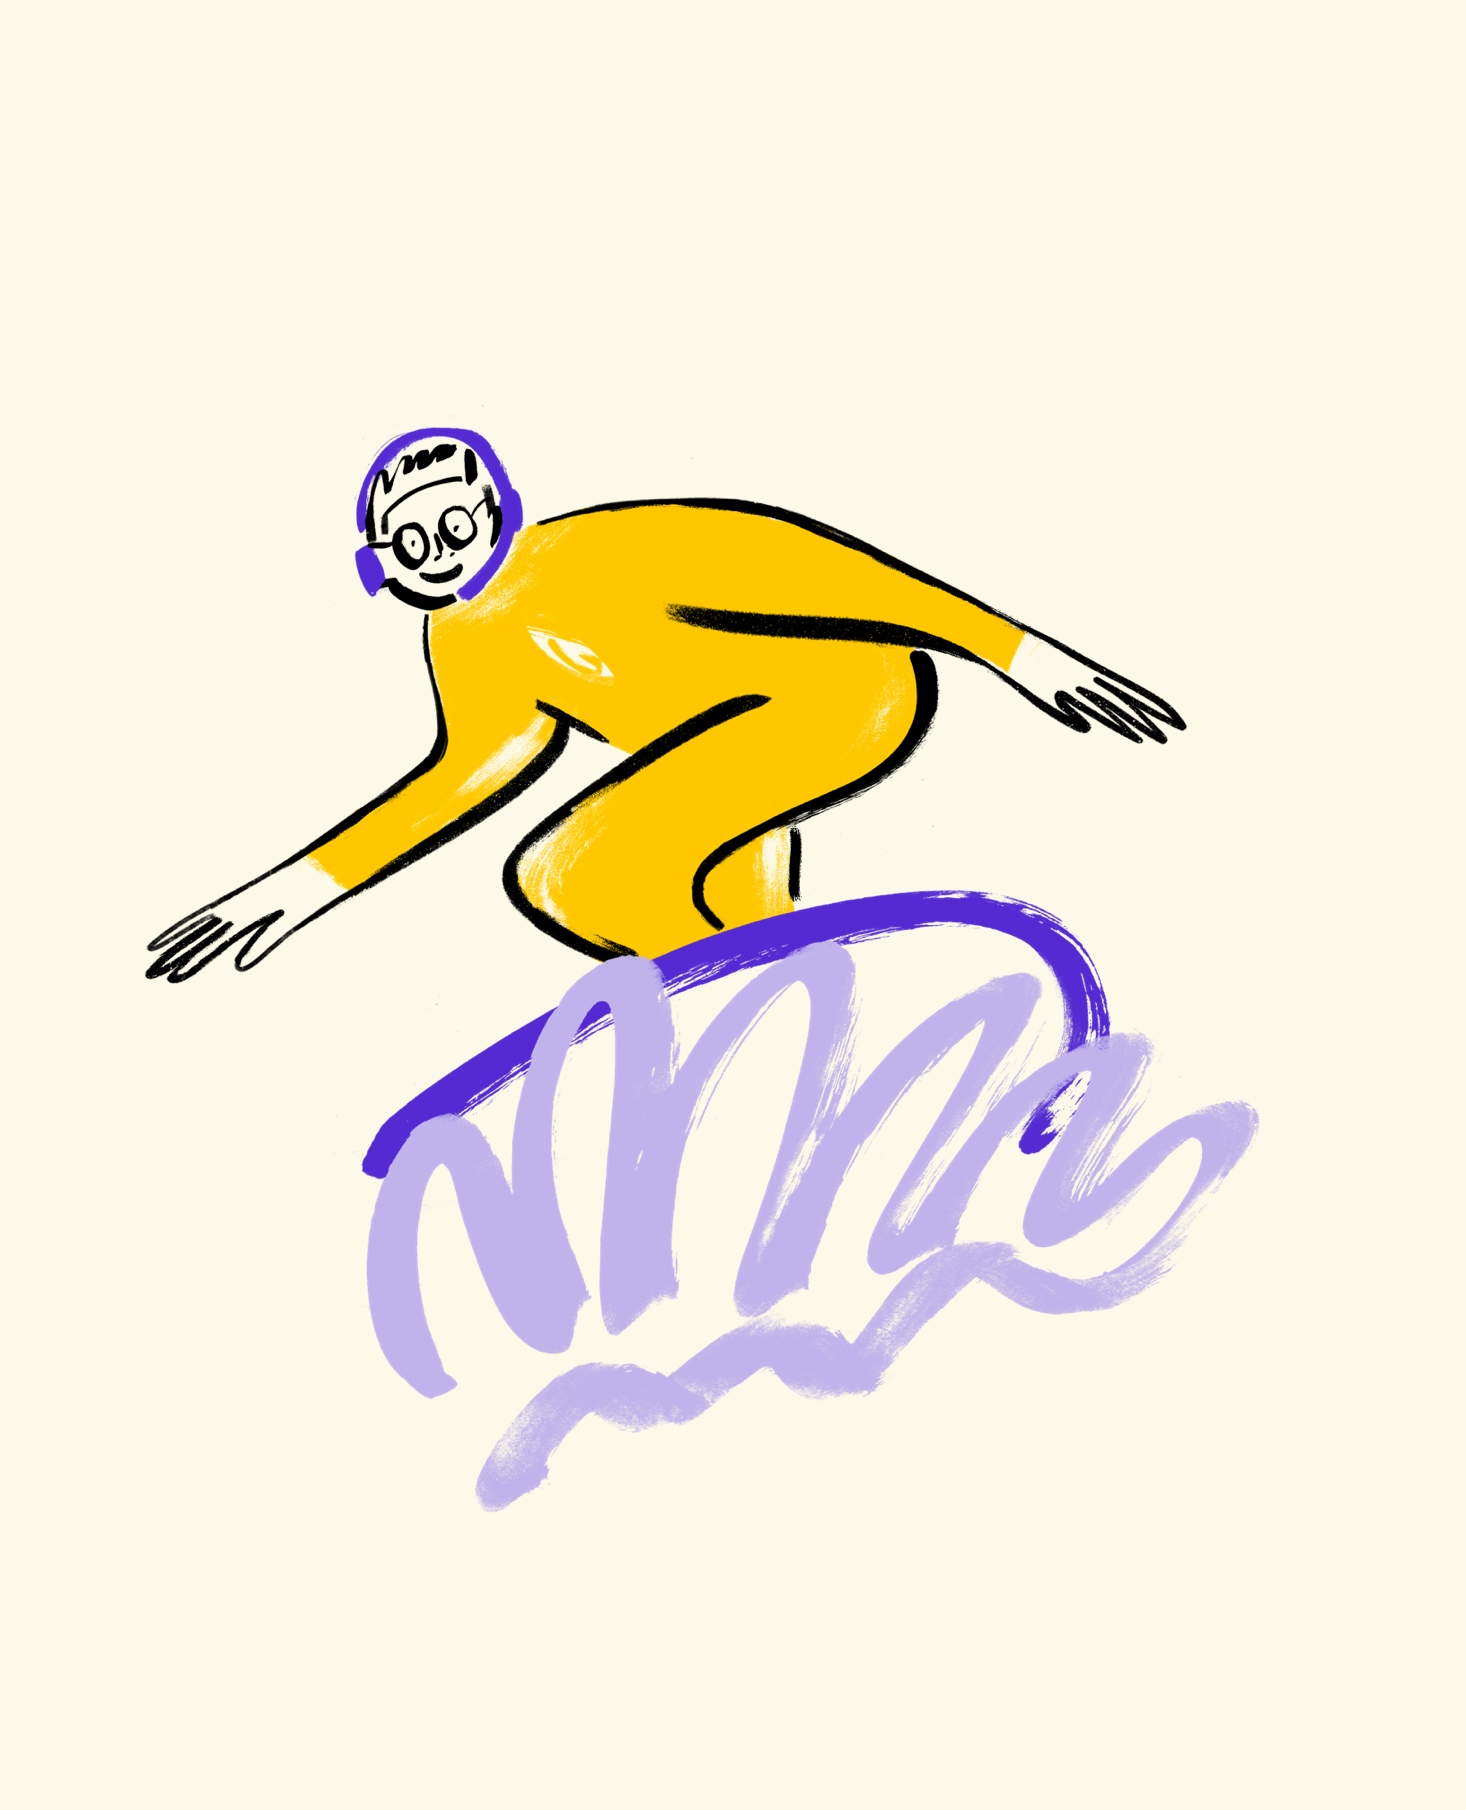 An illustration of a surfer